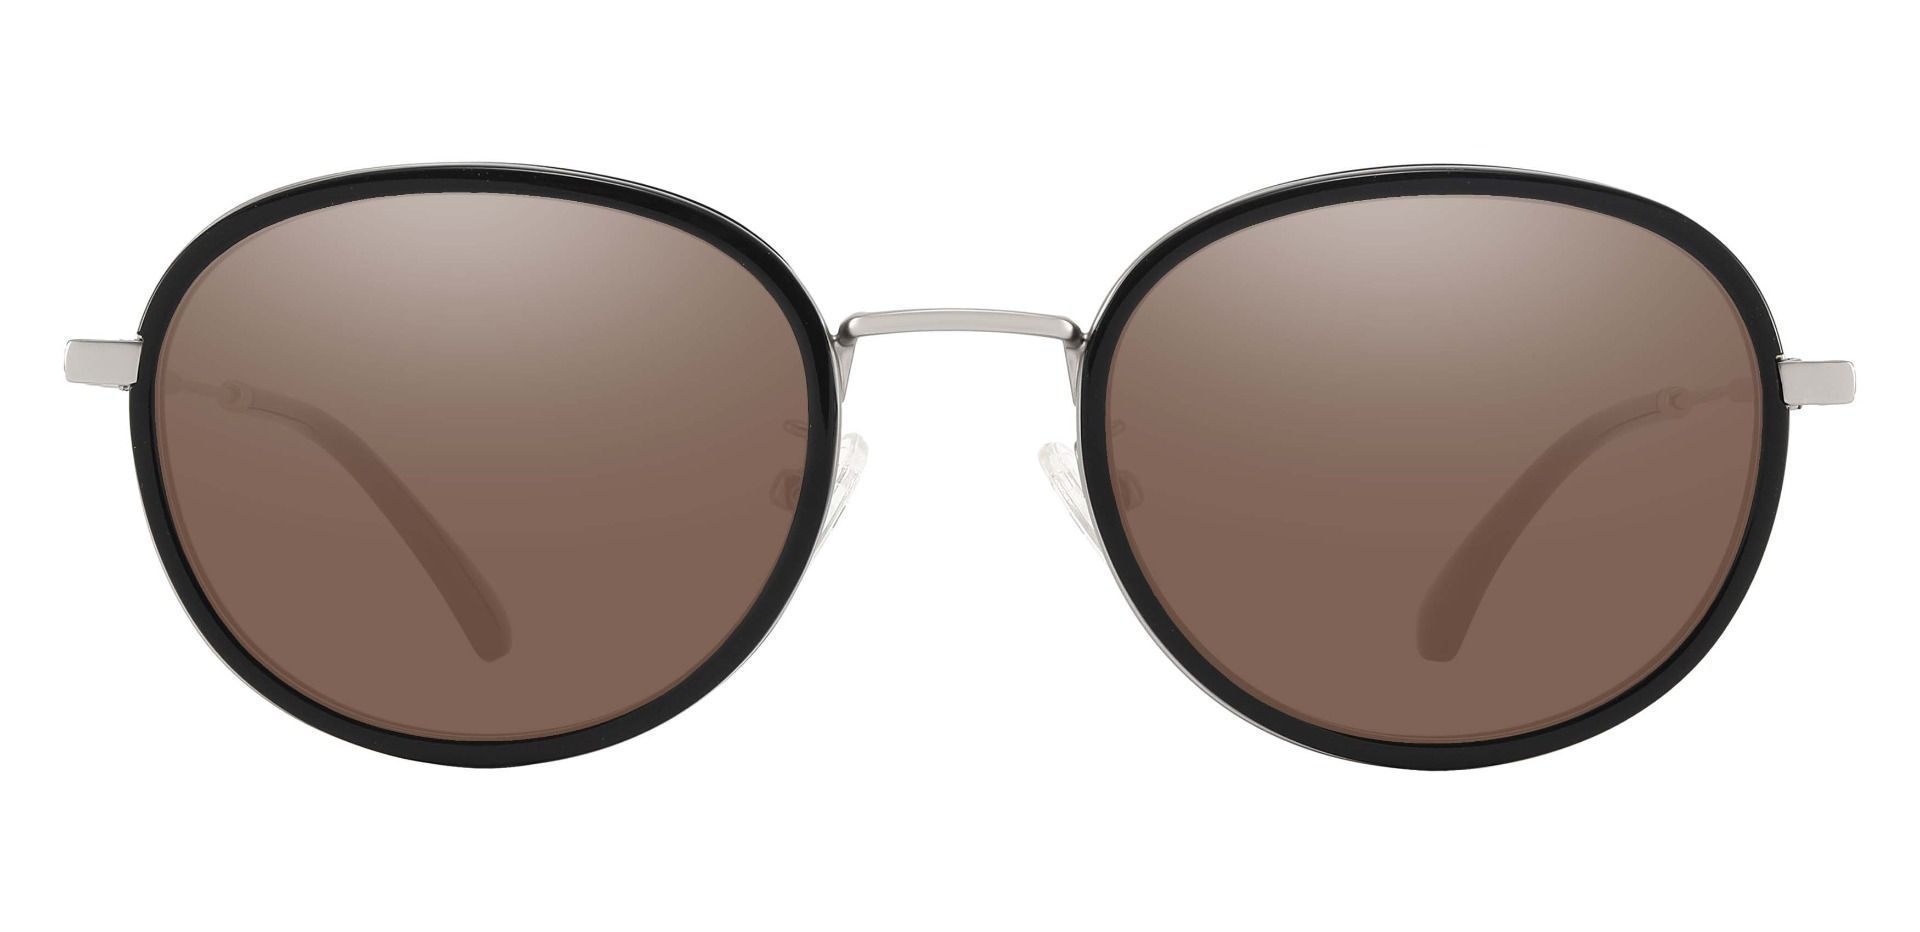 Edmore Oval Lined Bifocal Sunglasses - Black Frame With Brown Lenses